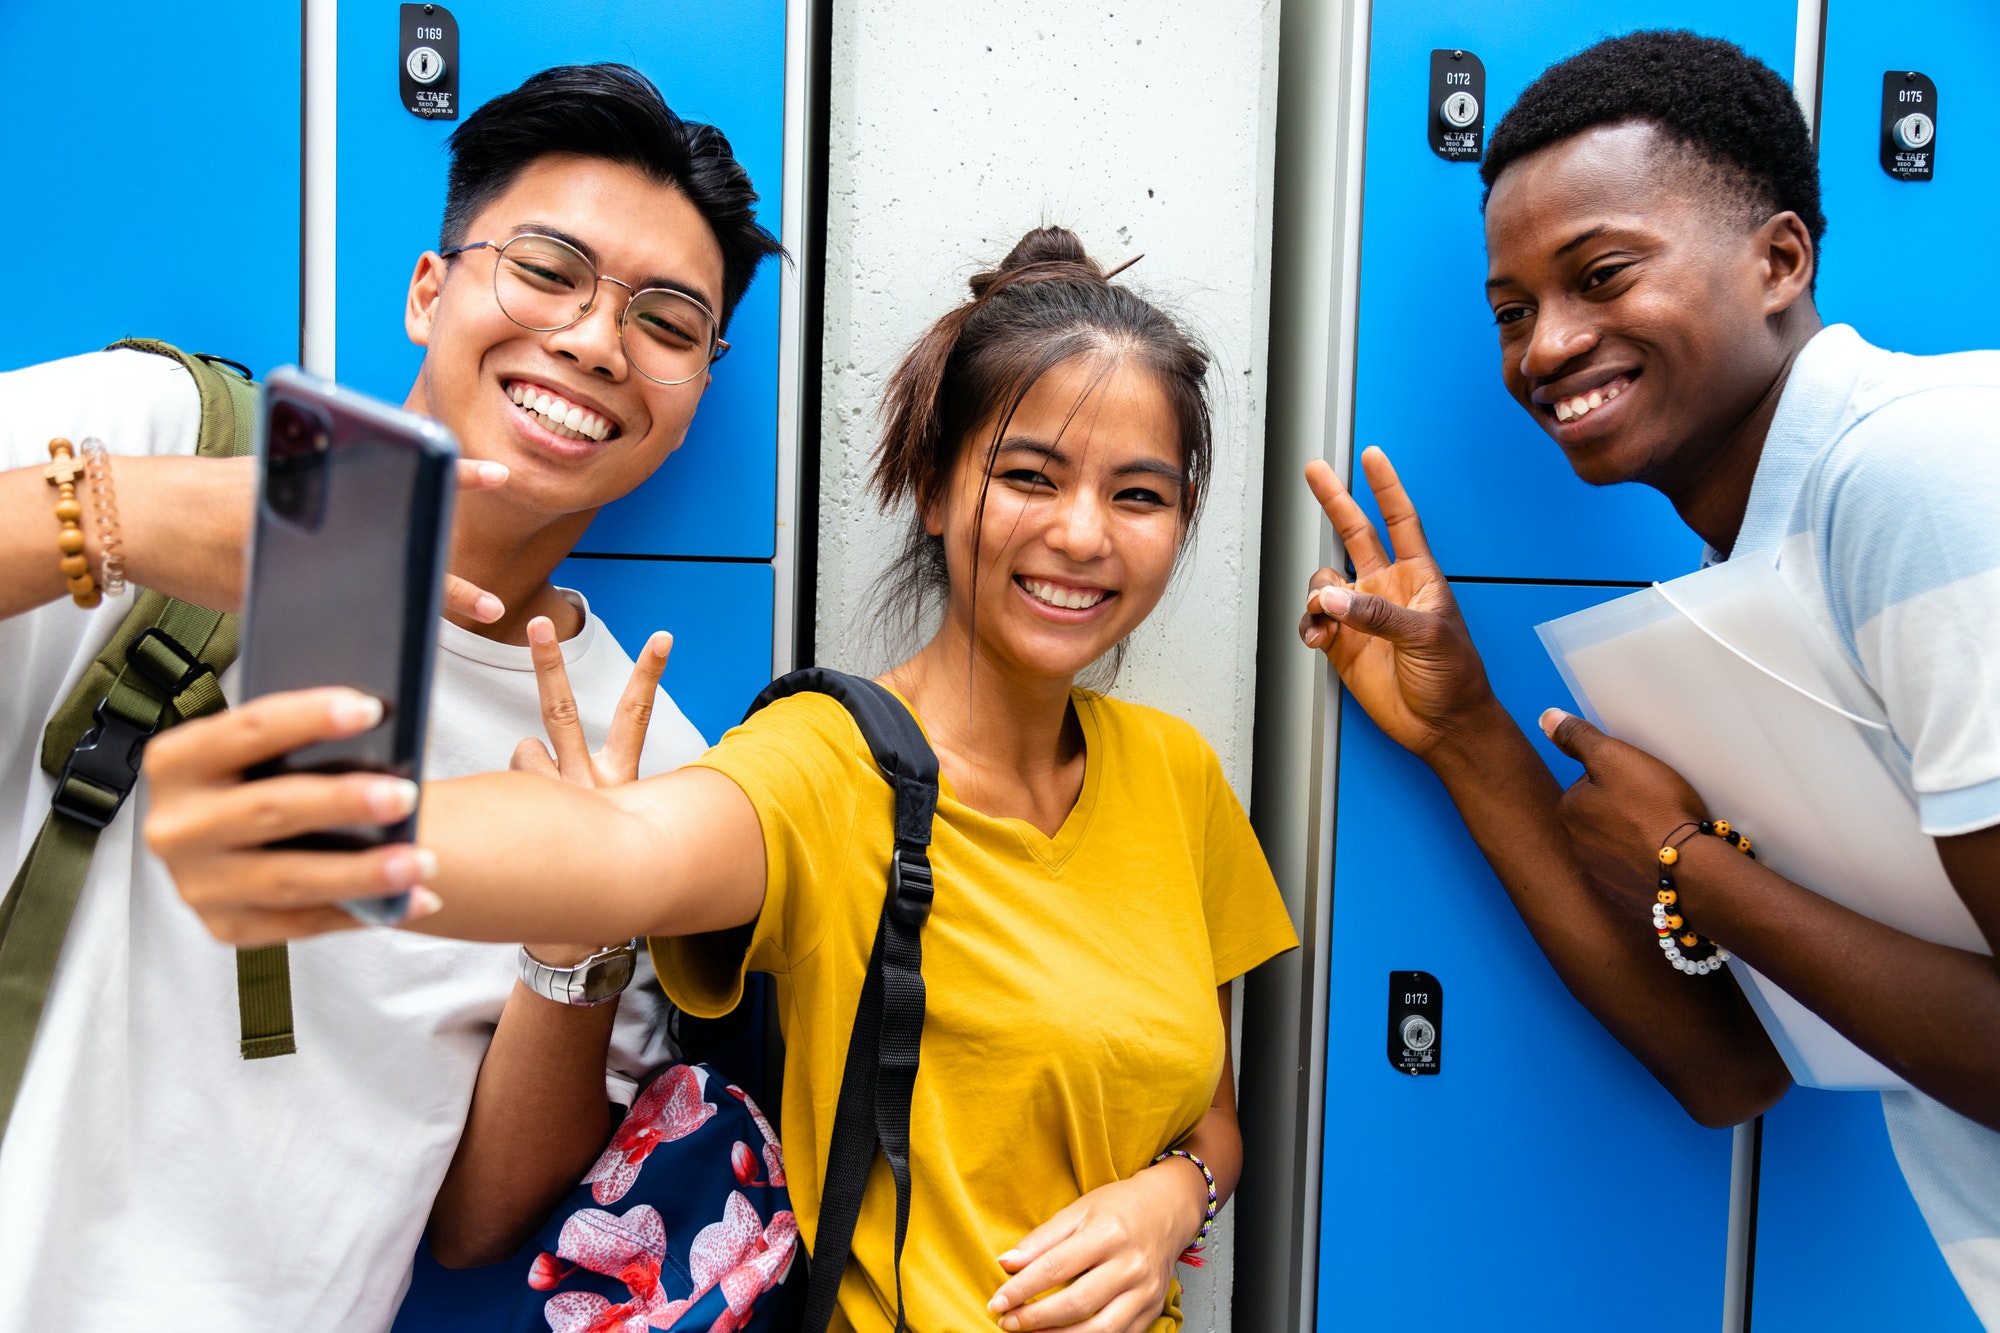 Smiling group of multiracial teen friends taking a selfie in high school corridor.